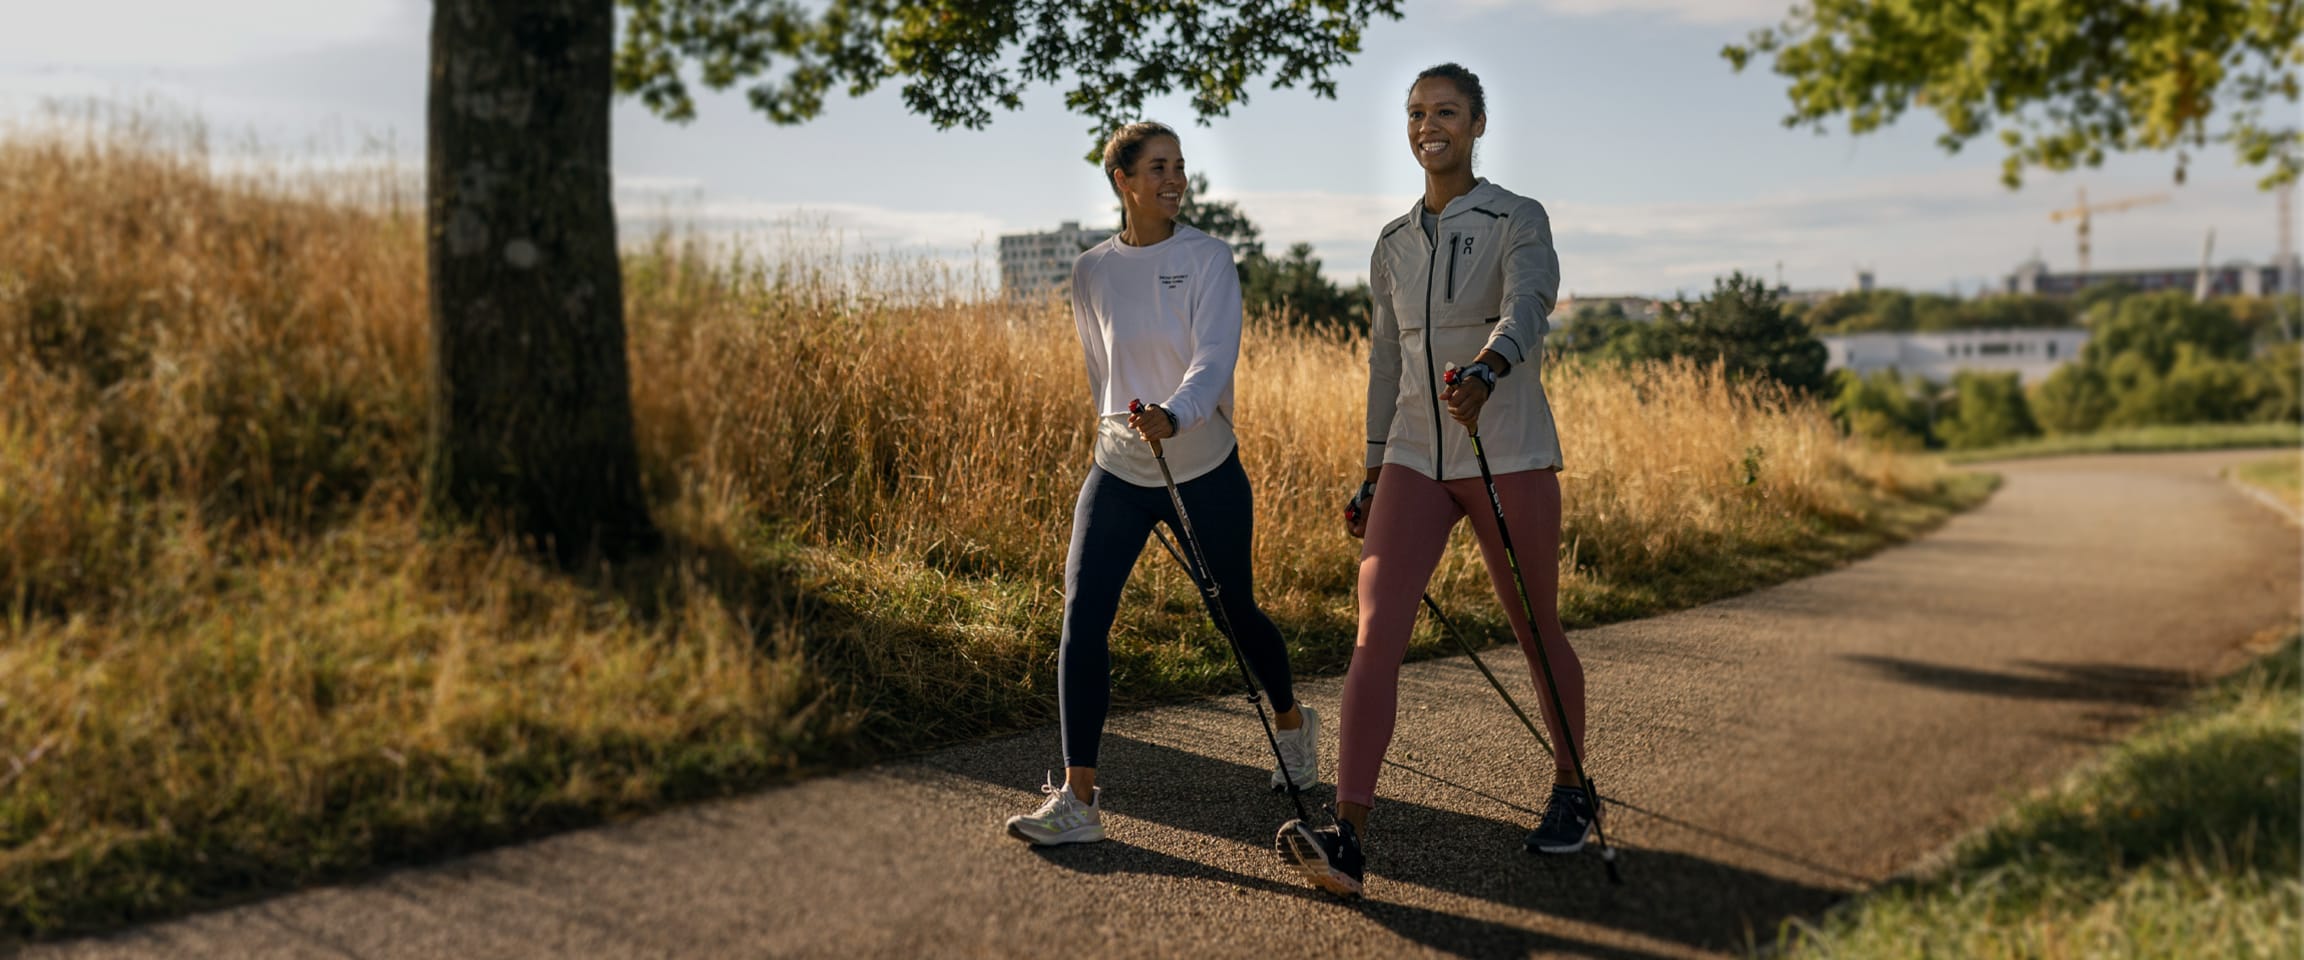 Nordic Walking Header Image